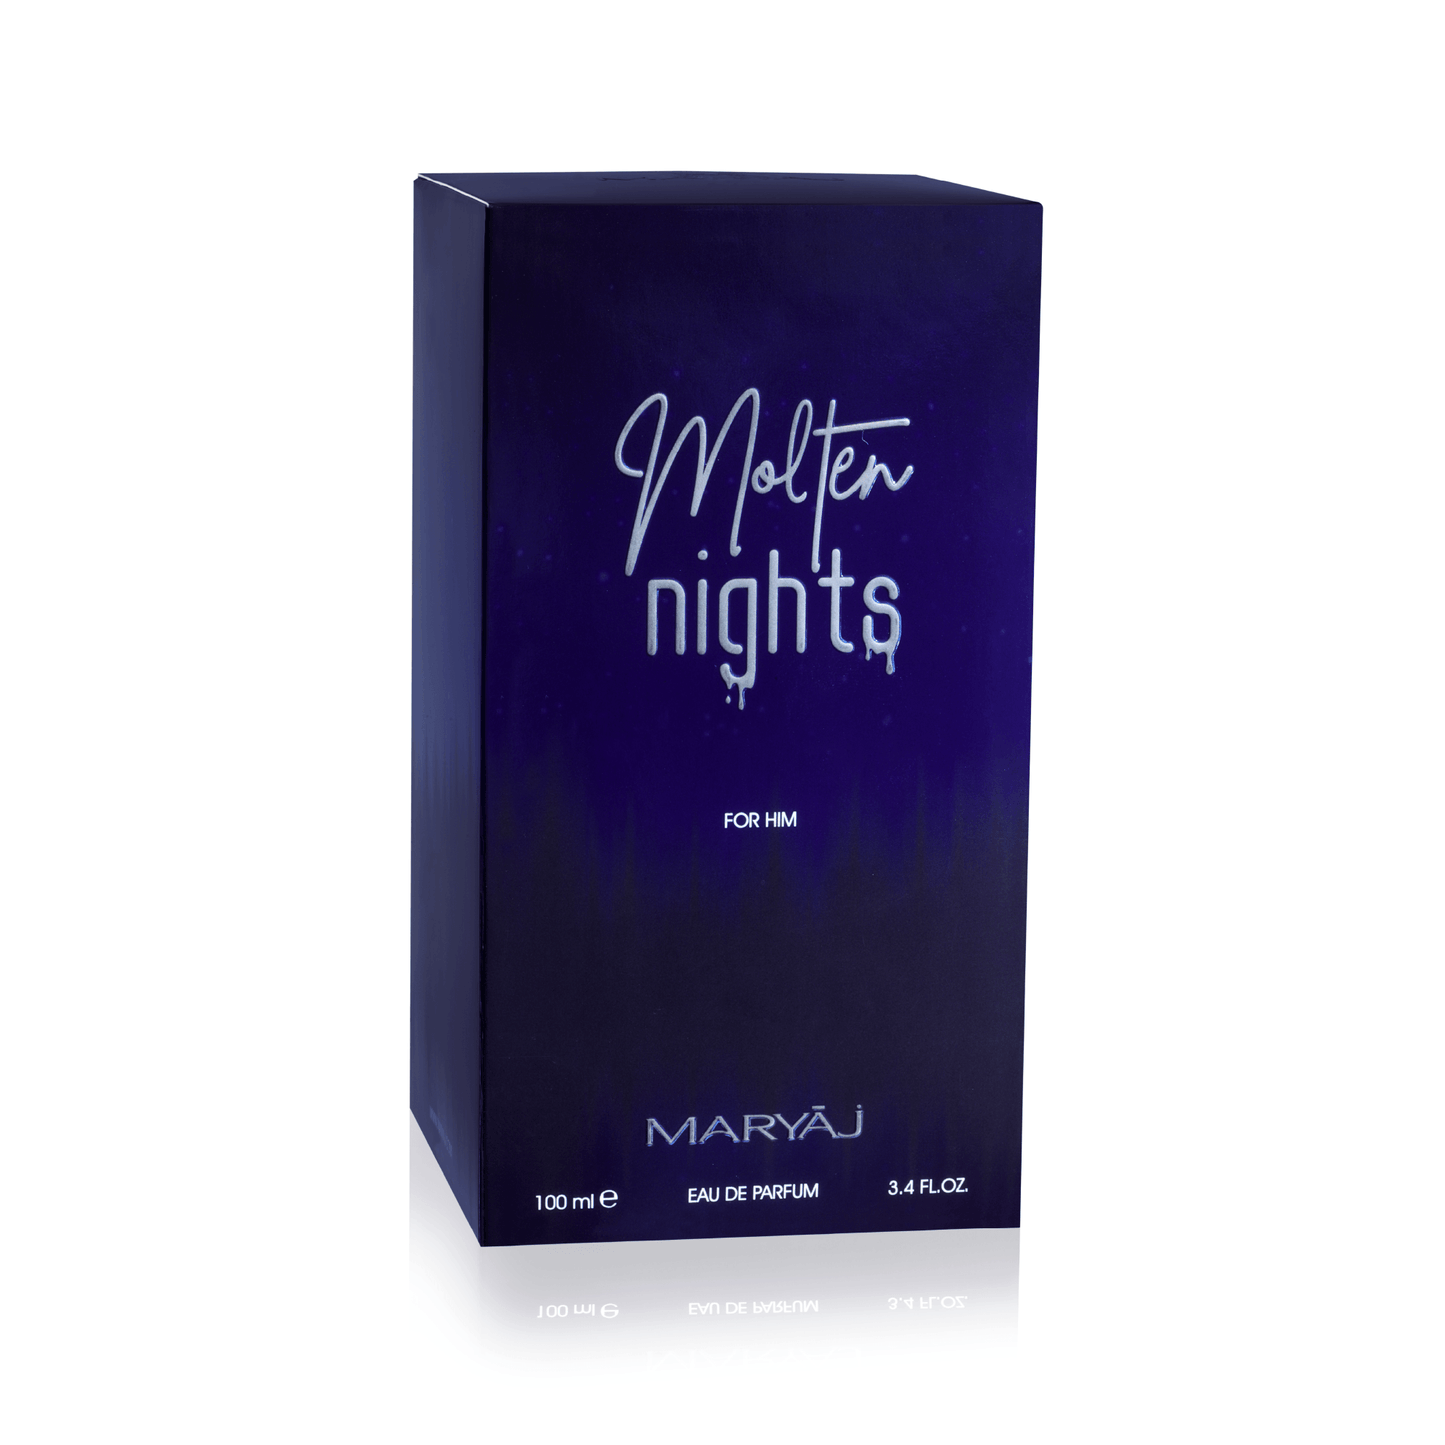 MOLTEN NIGHTS Eau De Parfum For Men, 100 ml